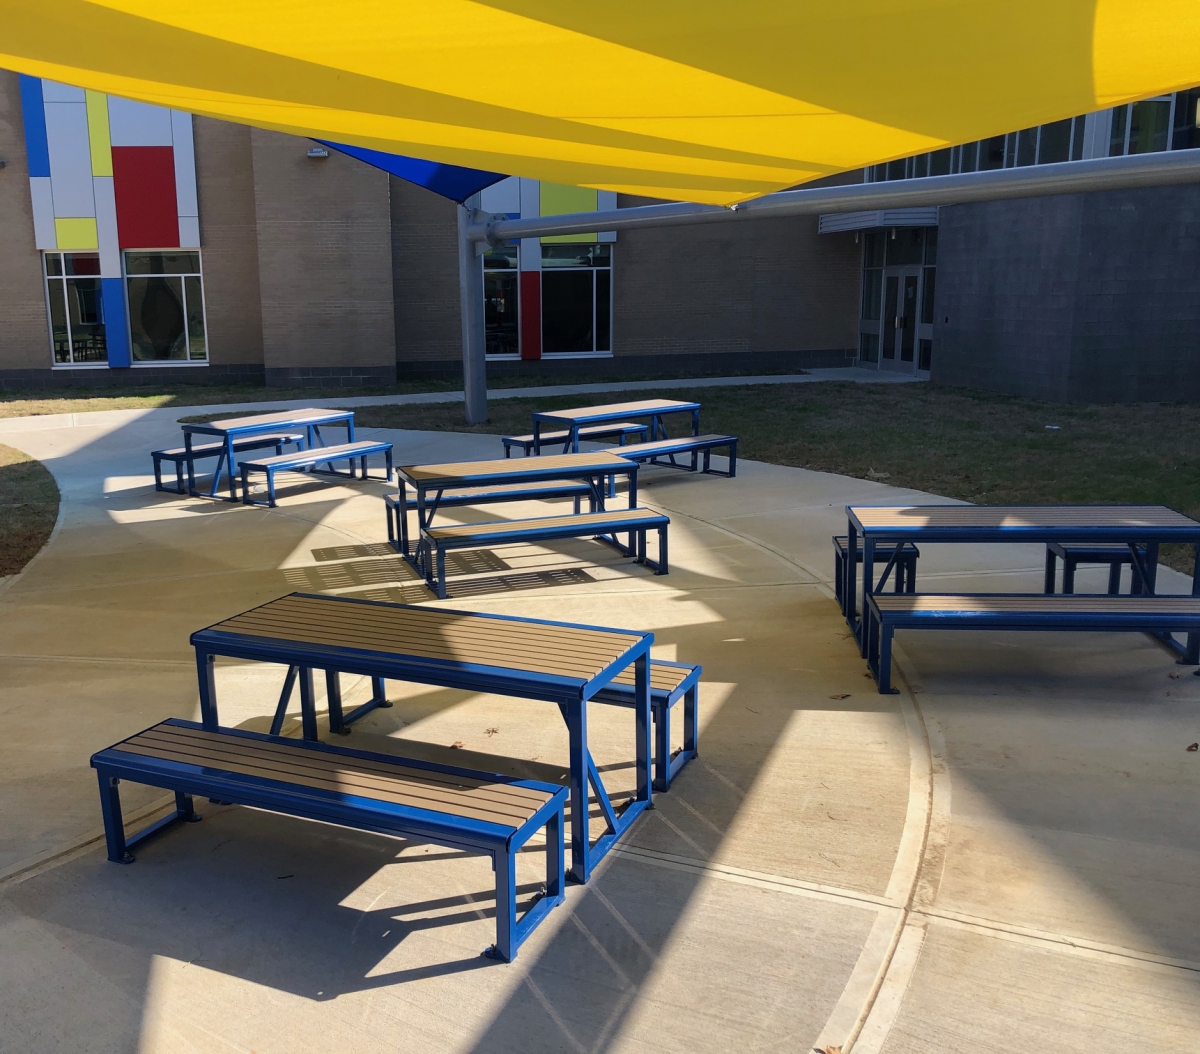 299 tables at a school 